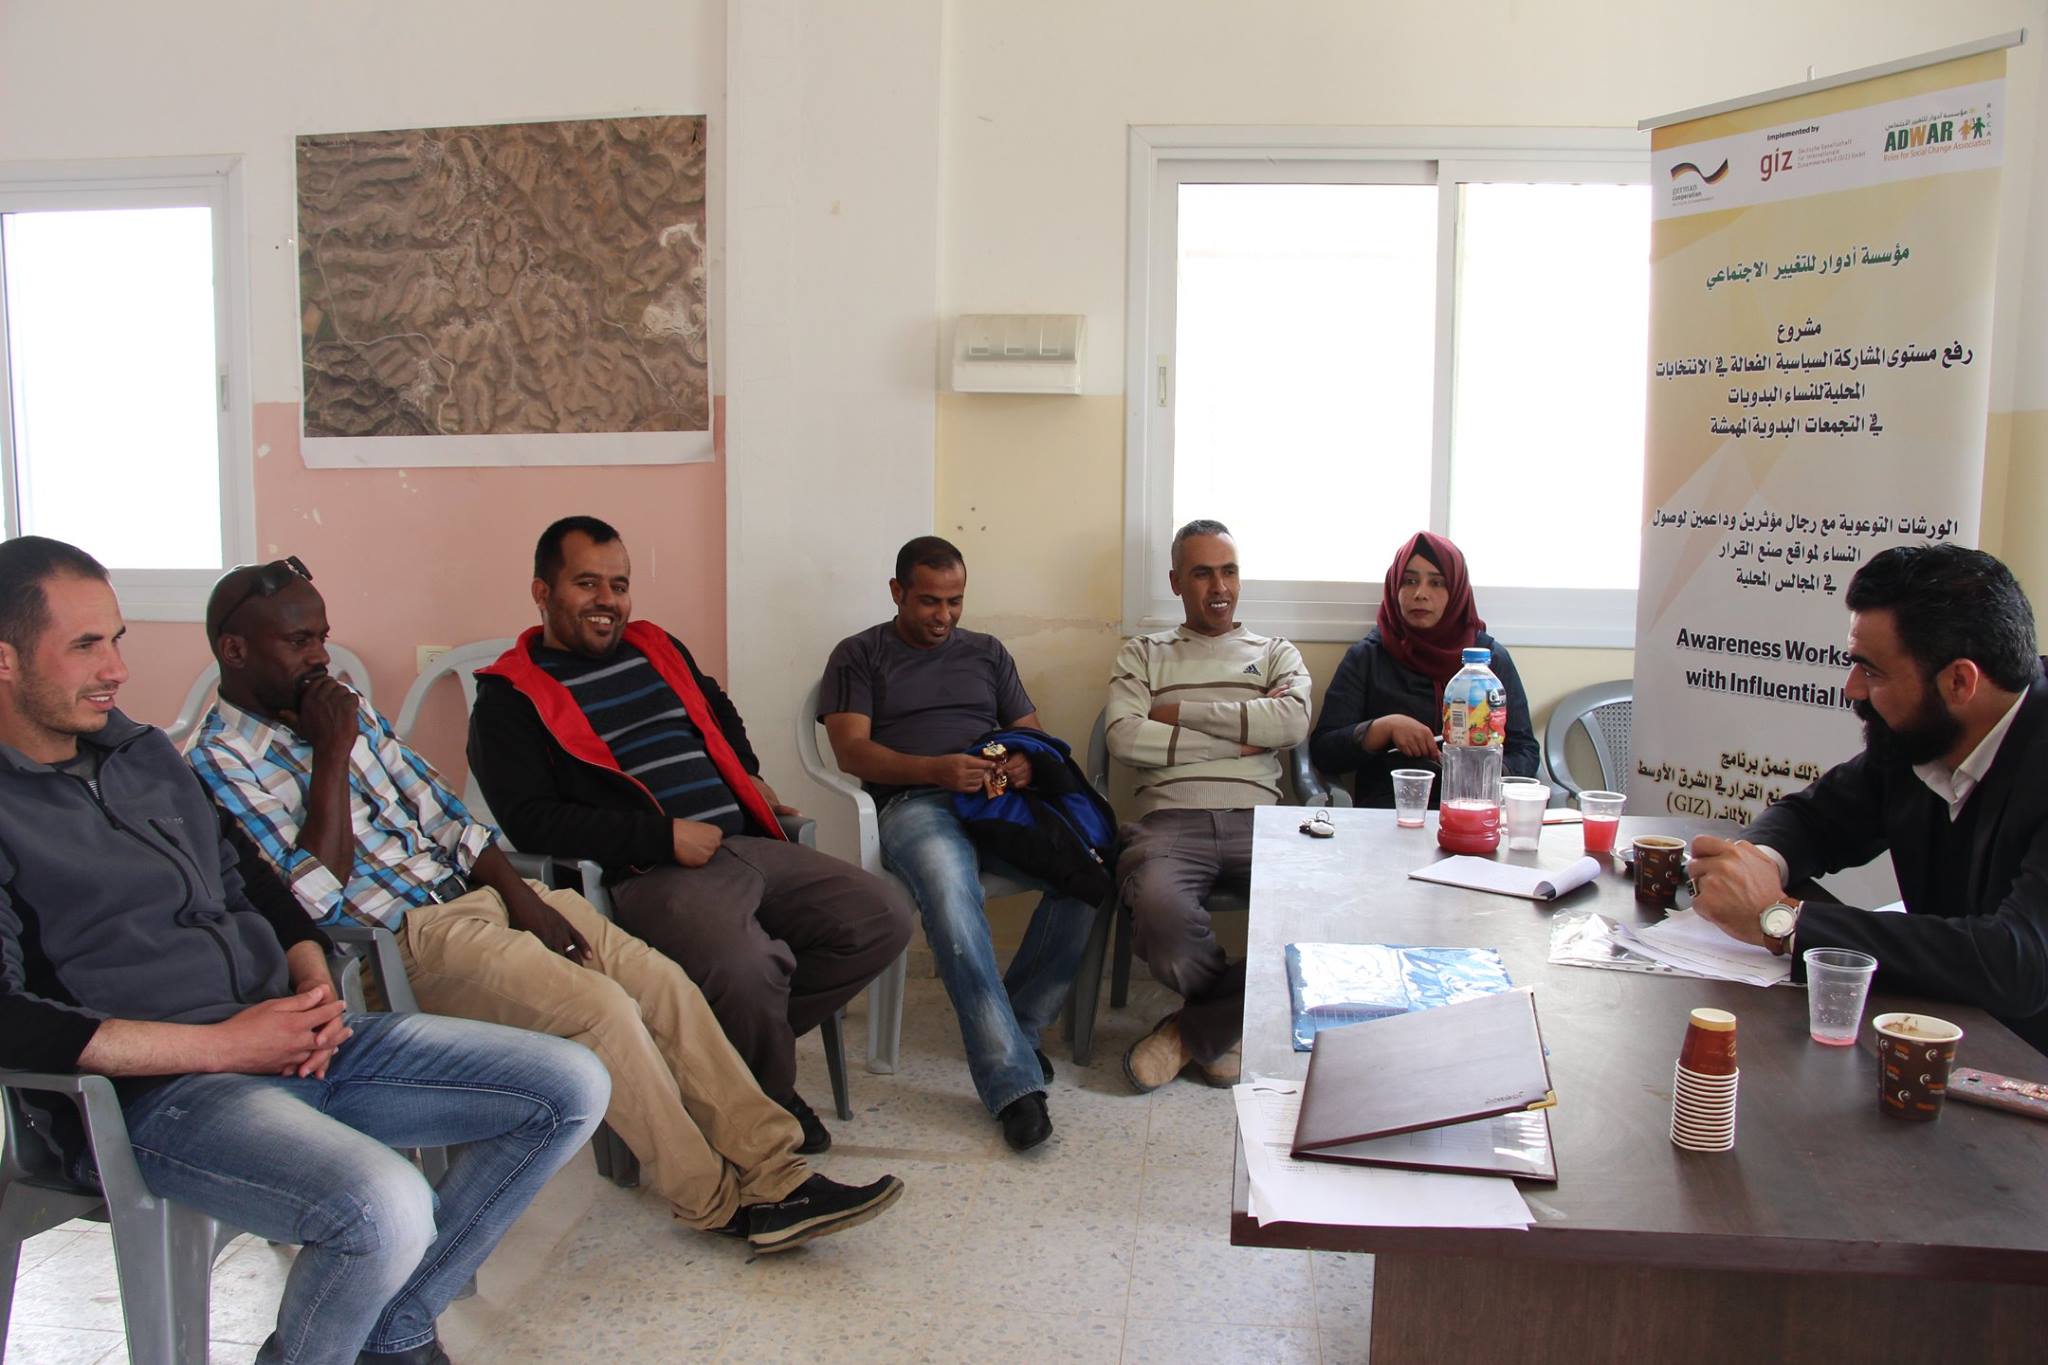  The second awareness workshop with influential men had been held at AlRamadin Bedouin community .